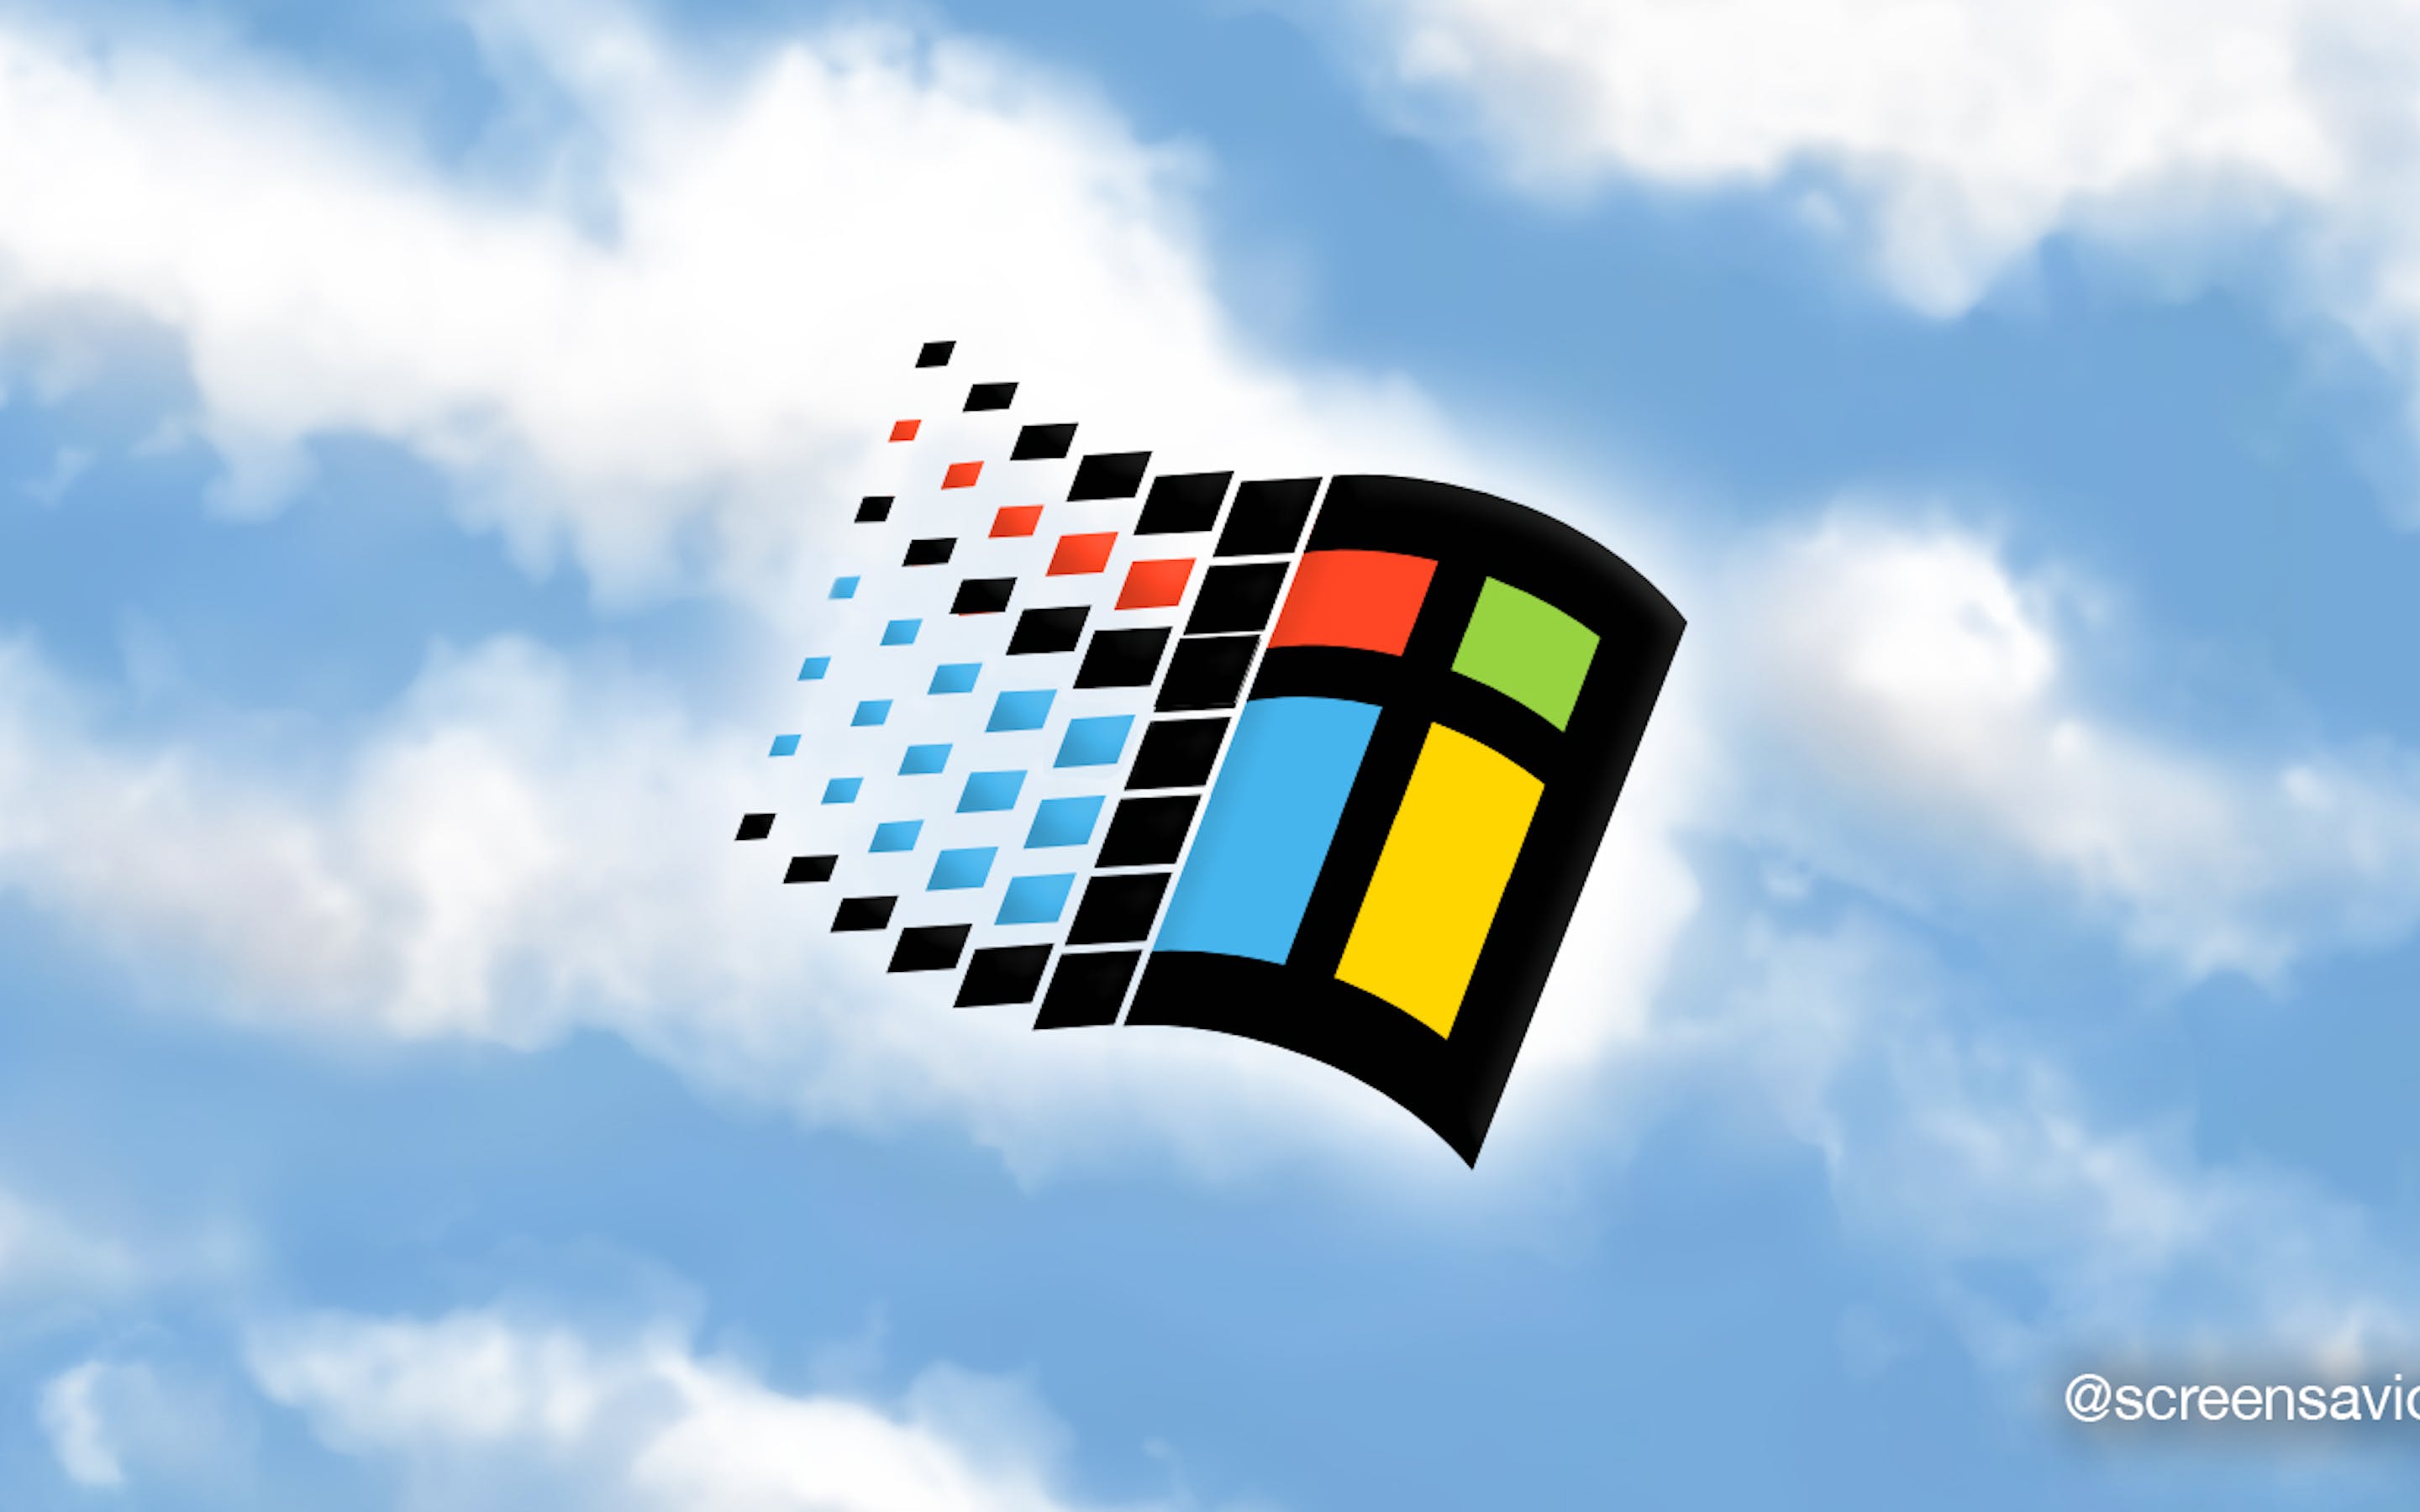 A windows logo is shown in the sky - Windows 95